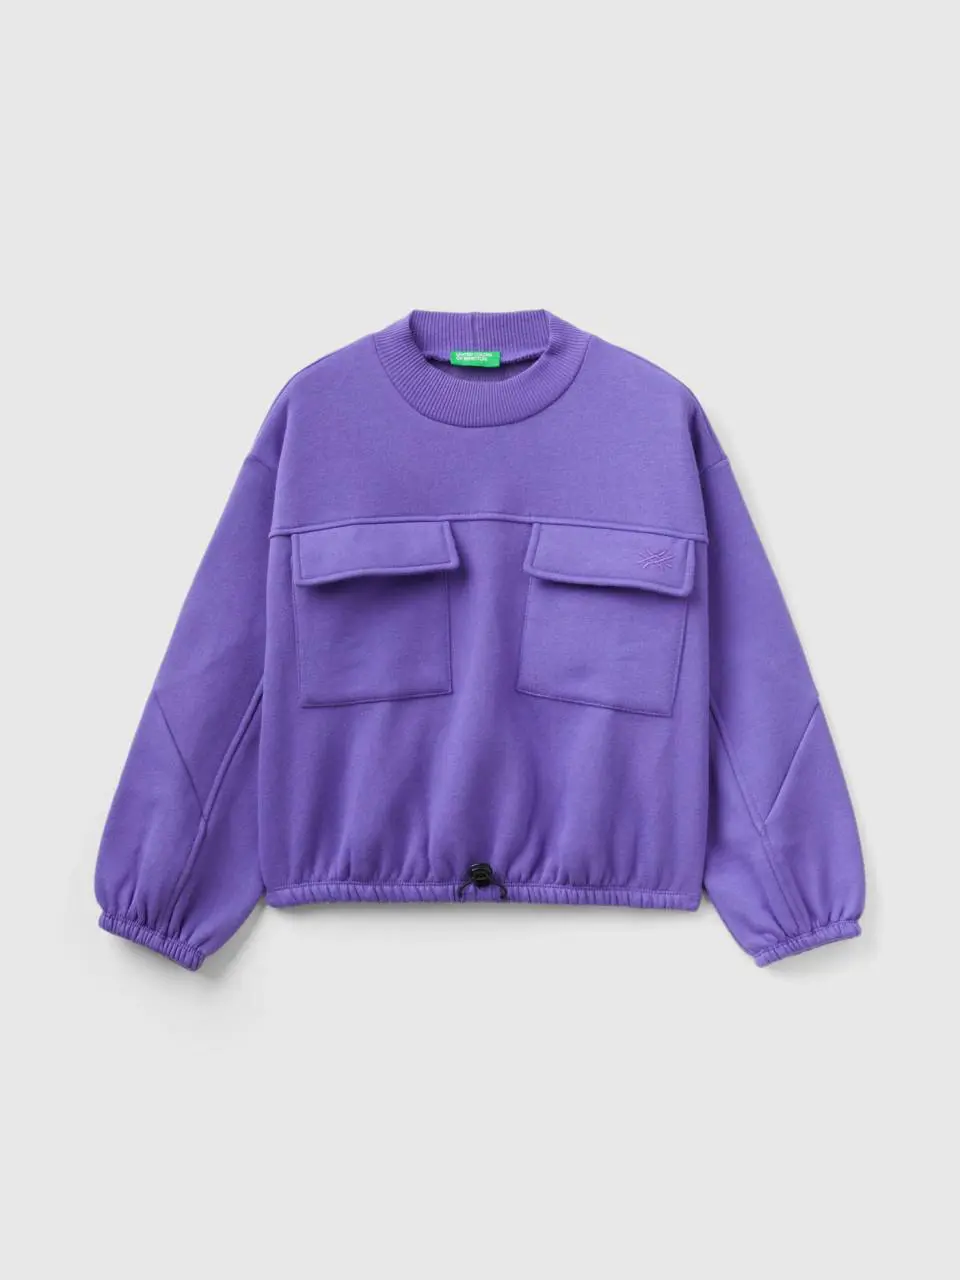 Benetton boxy fit sweatshirt with pockets. 1